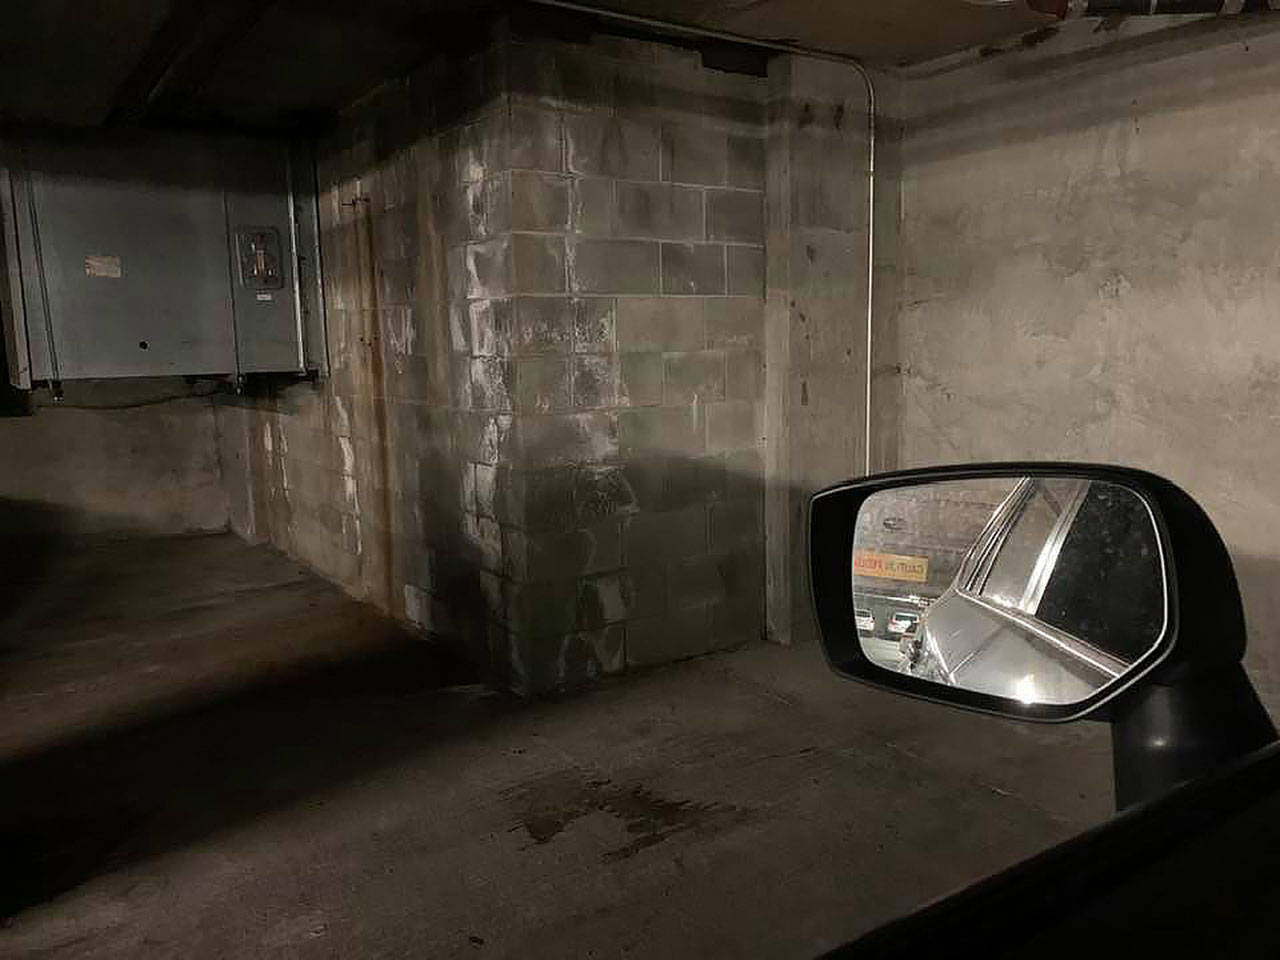 Diane Gorman was tested for COVID-19 in this University of Washington parking garage. (Diane Gorman)